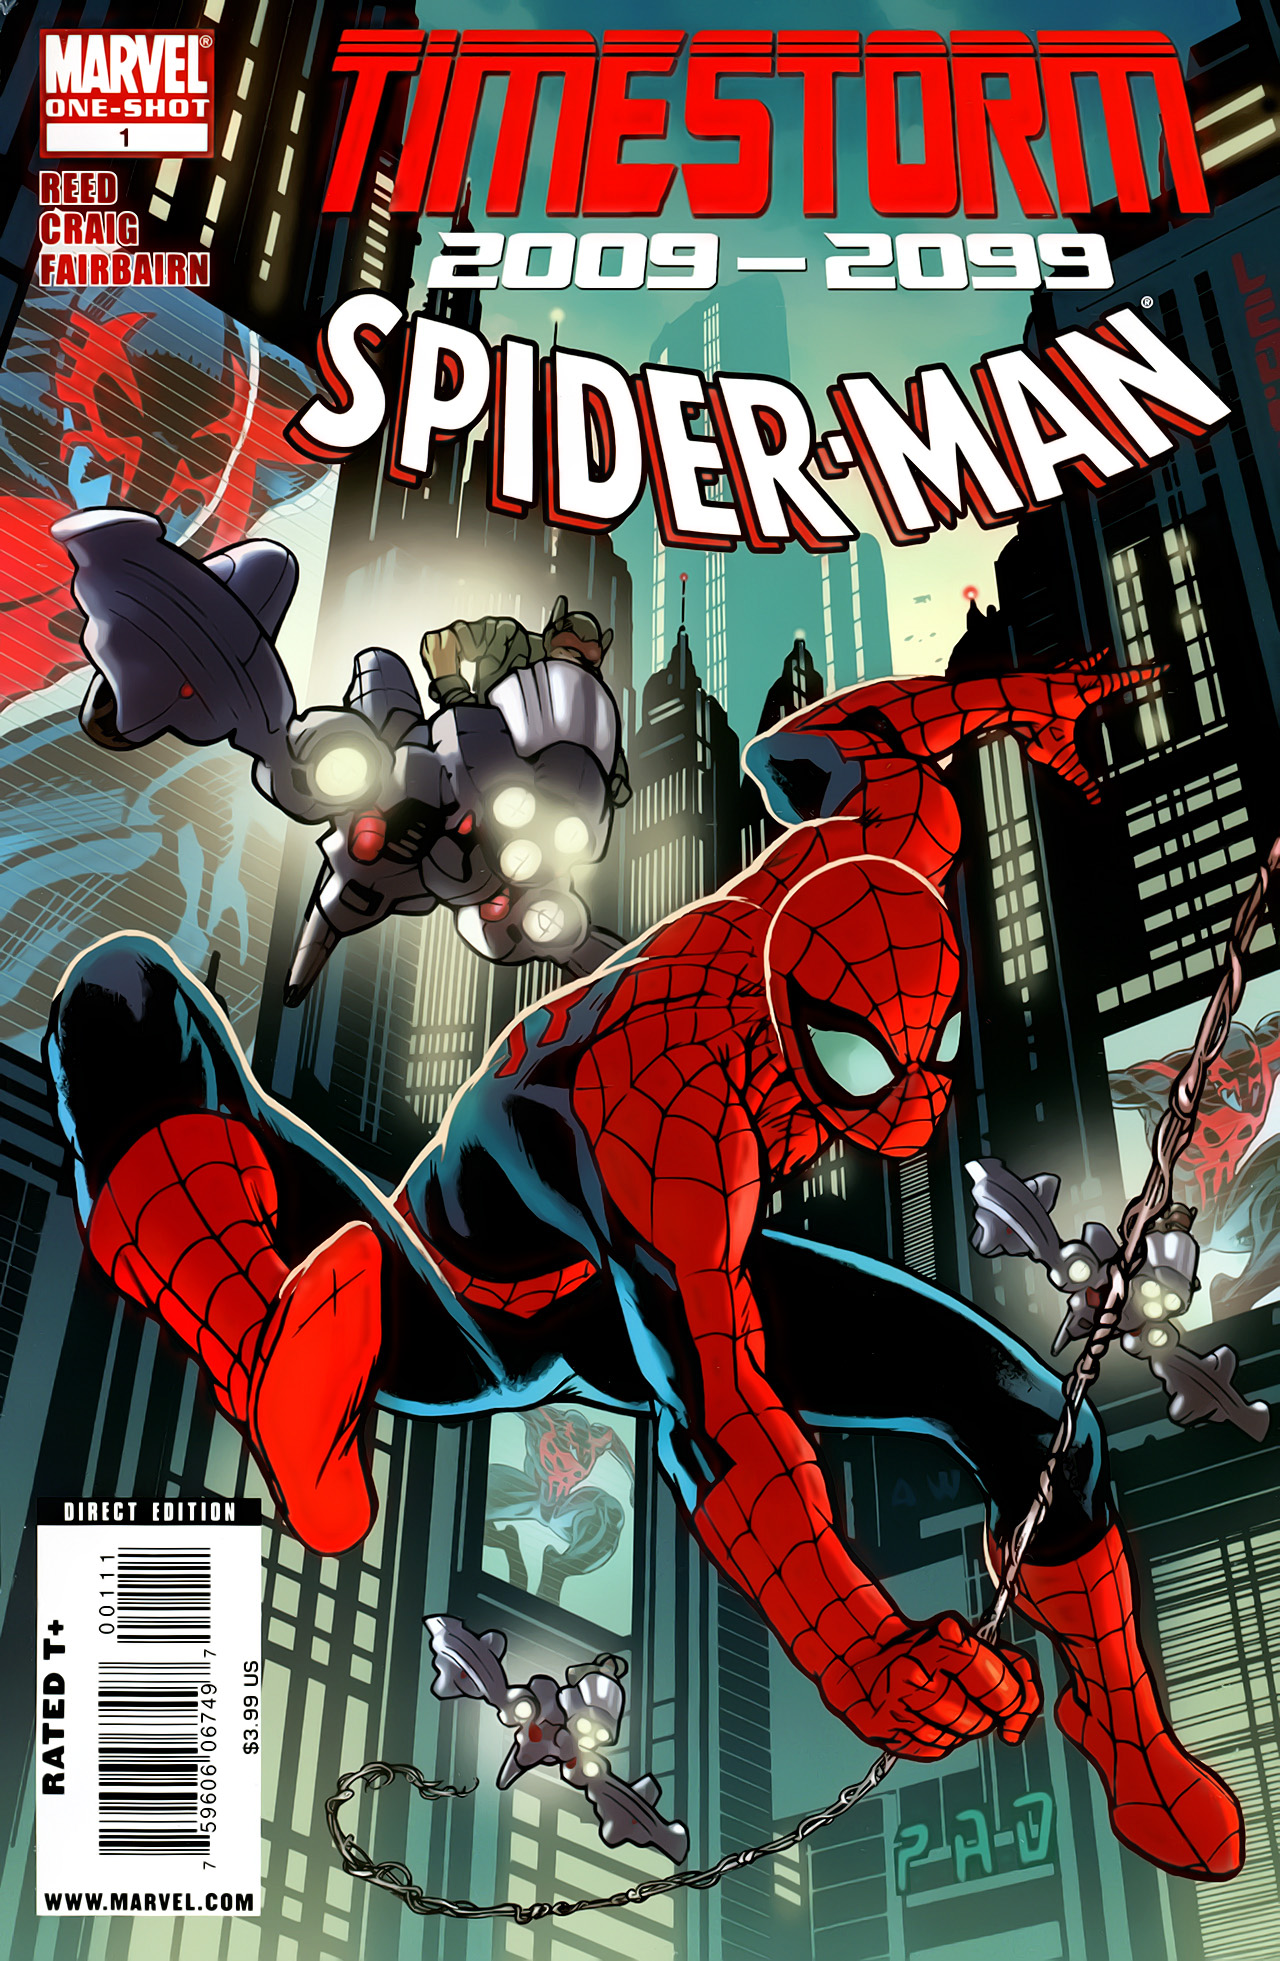 Read online Timestorm 2009/2099: Spider-Man comic -  Issue # Full - 1